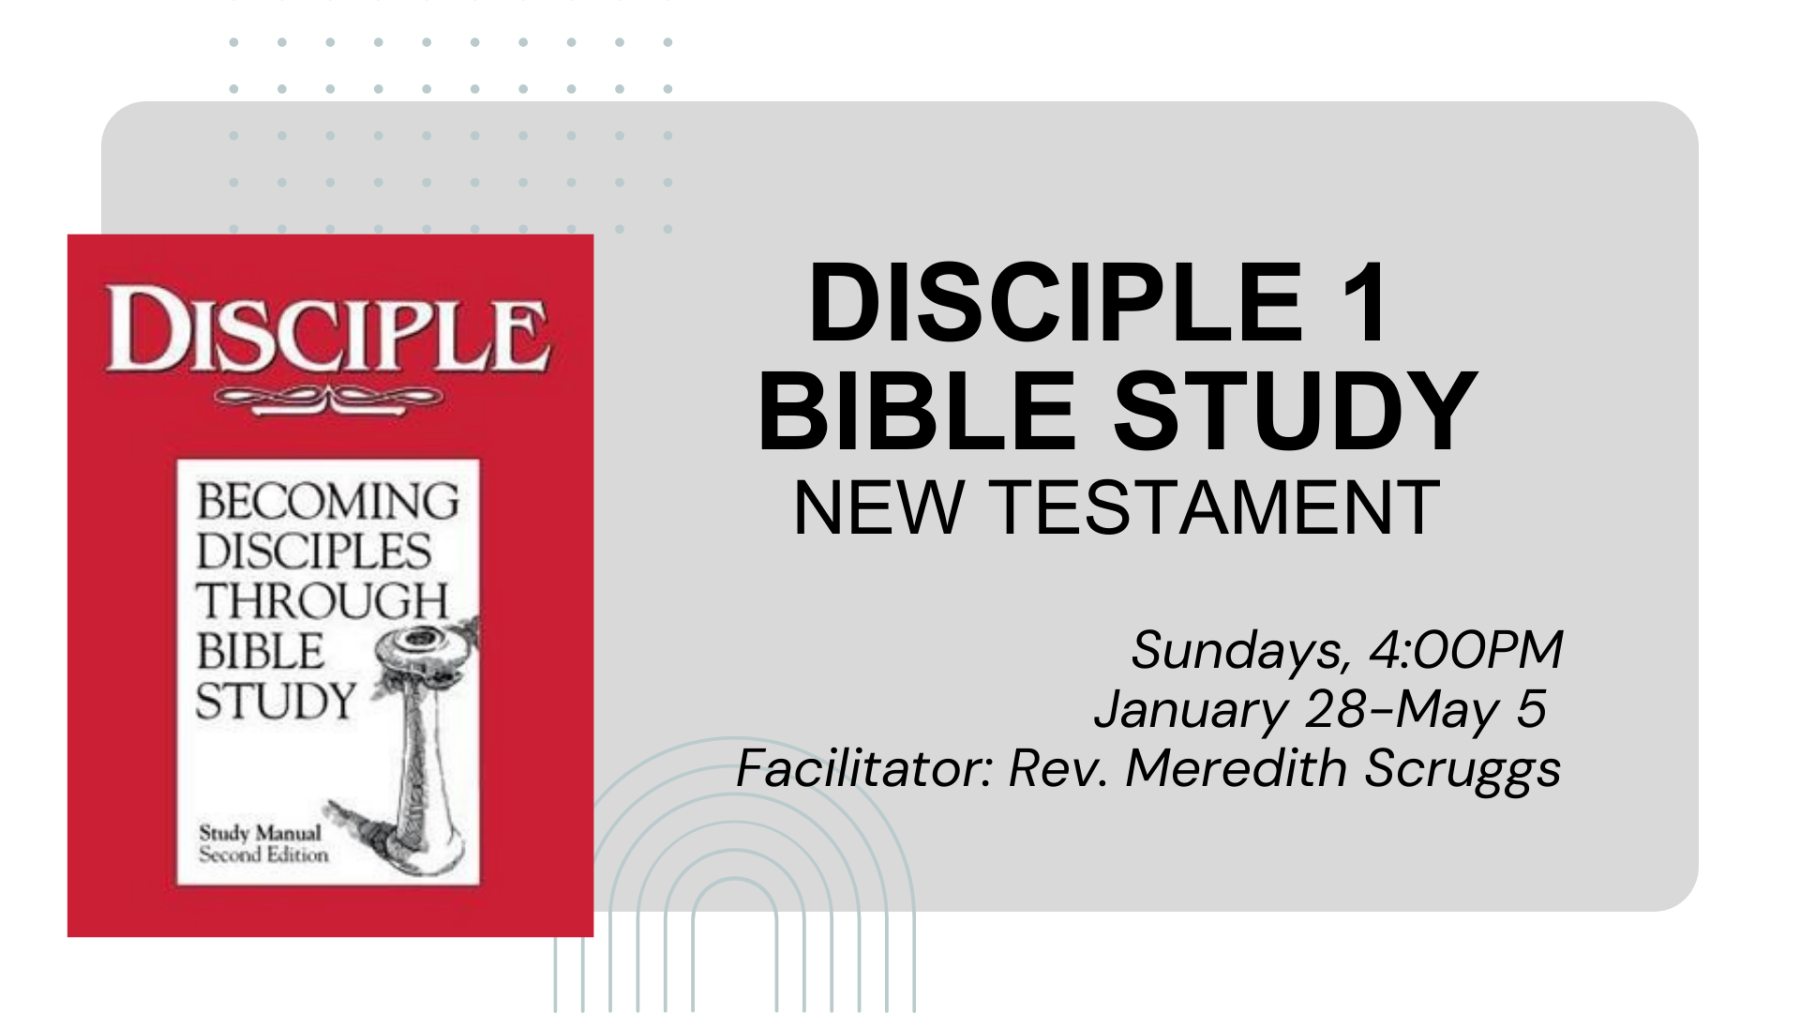 Disciple 1 Bible Study (Fast Track) - New Testament